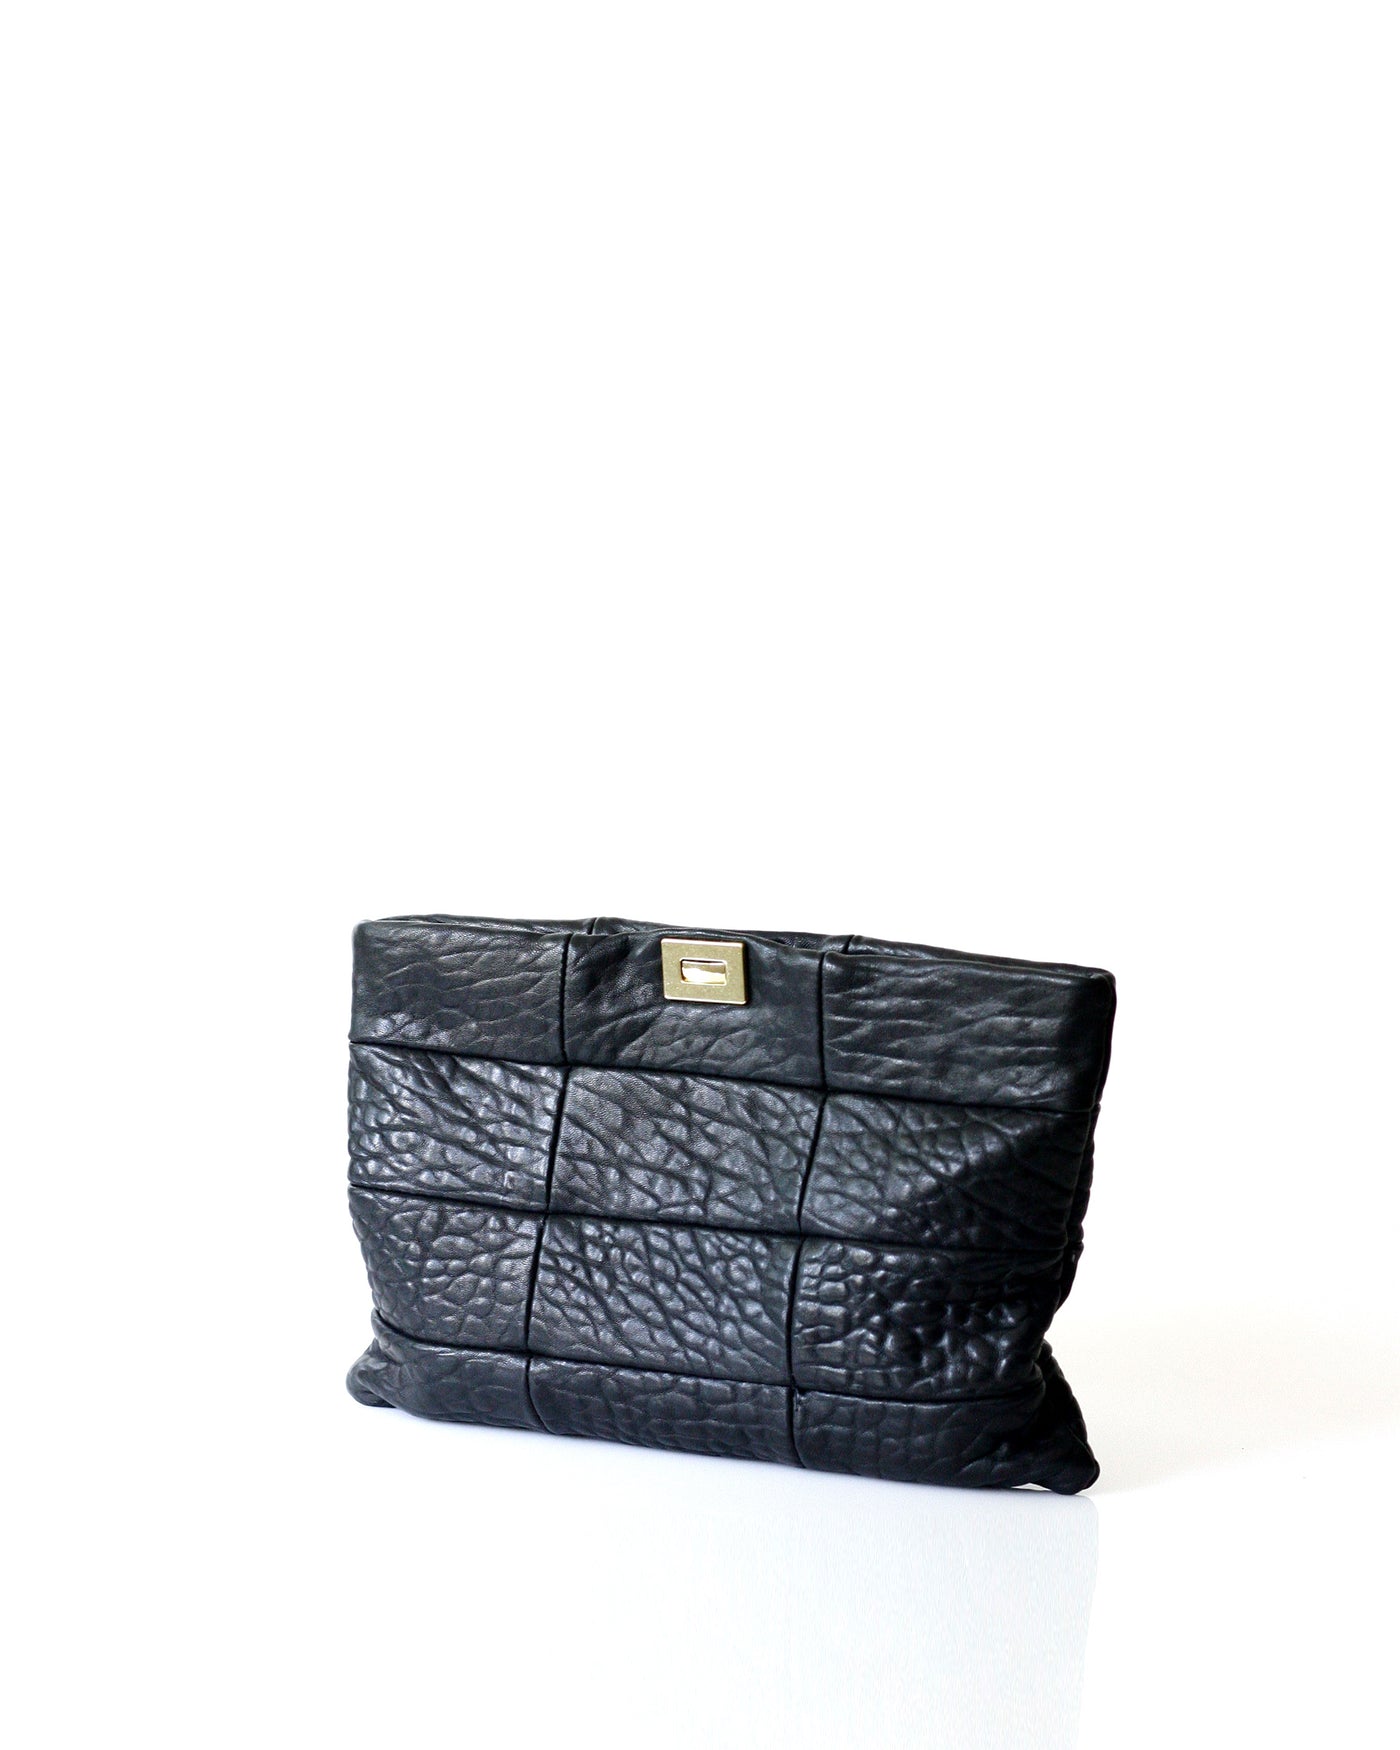 Magdalen Clutch | Shrunken Lamb - Opelle bag Shrunken Lamb - Opelle leather handbag handcrafted leather bag toronto Canada